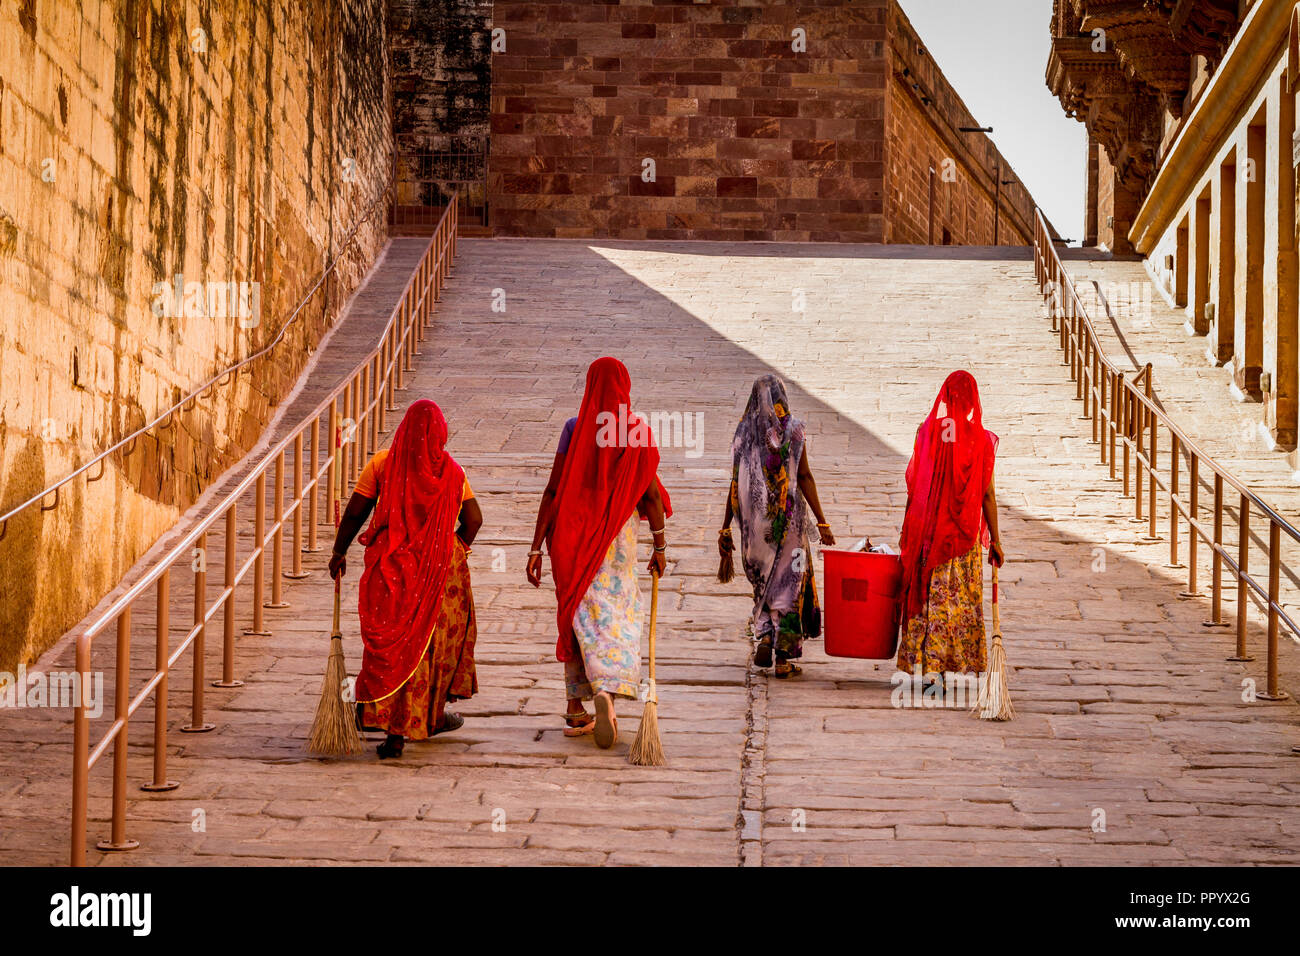 Pulizia indiano ladies salire a piedi a rampa in abiti colorati Meherangarh Fort, Jodhpur Foto Stock